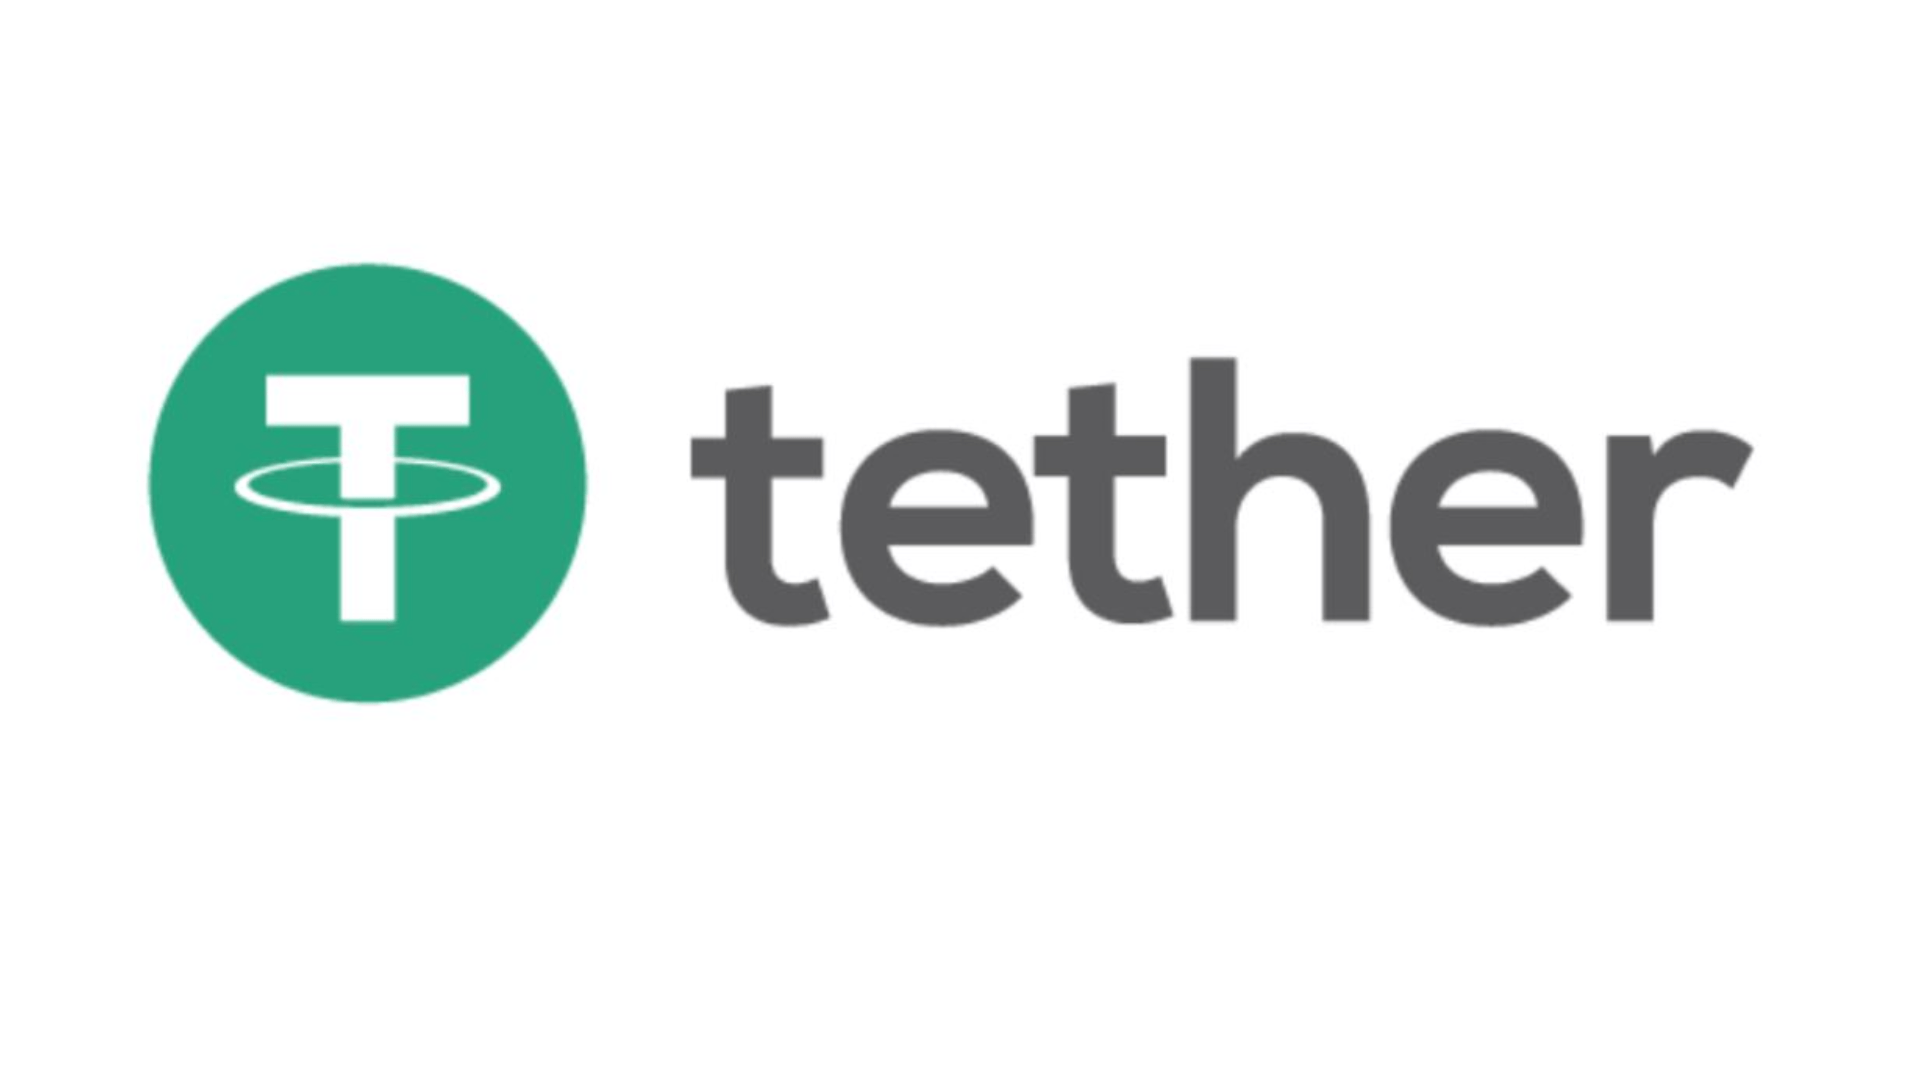 Fake Company Logo - Tether's Fake Digital Dollar May Signal Fraud, Portend Crypto